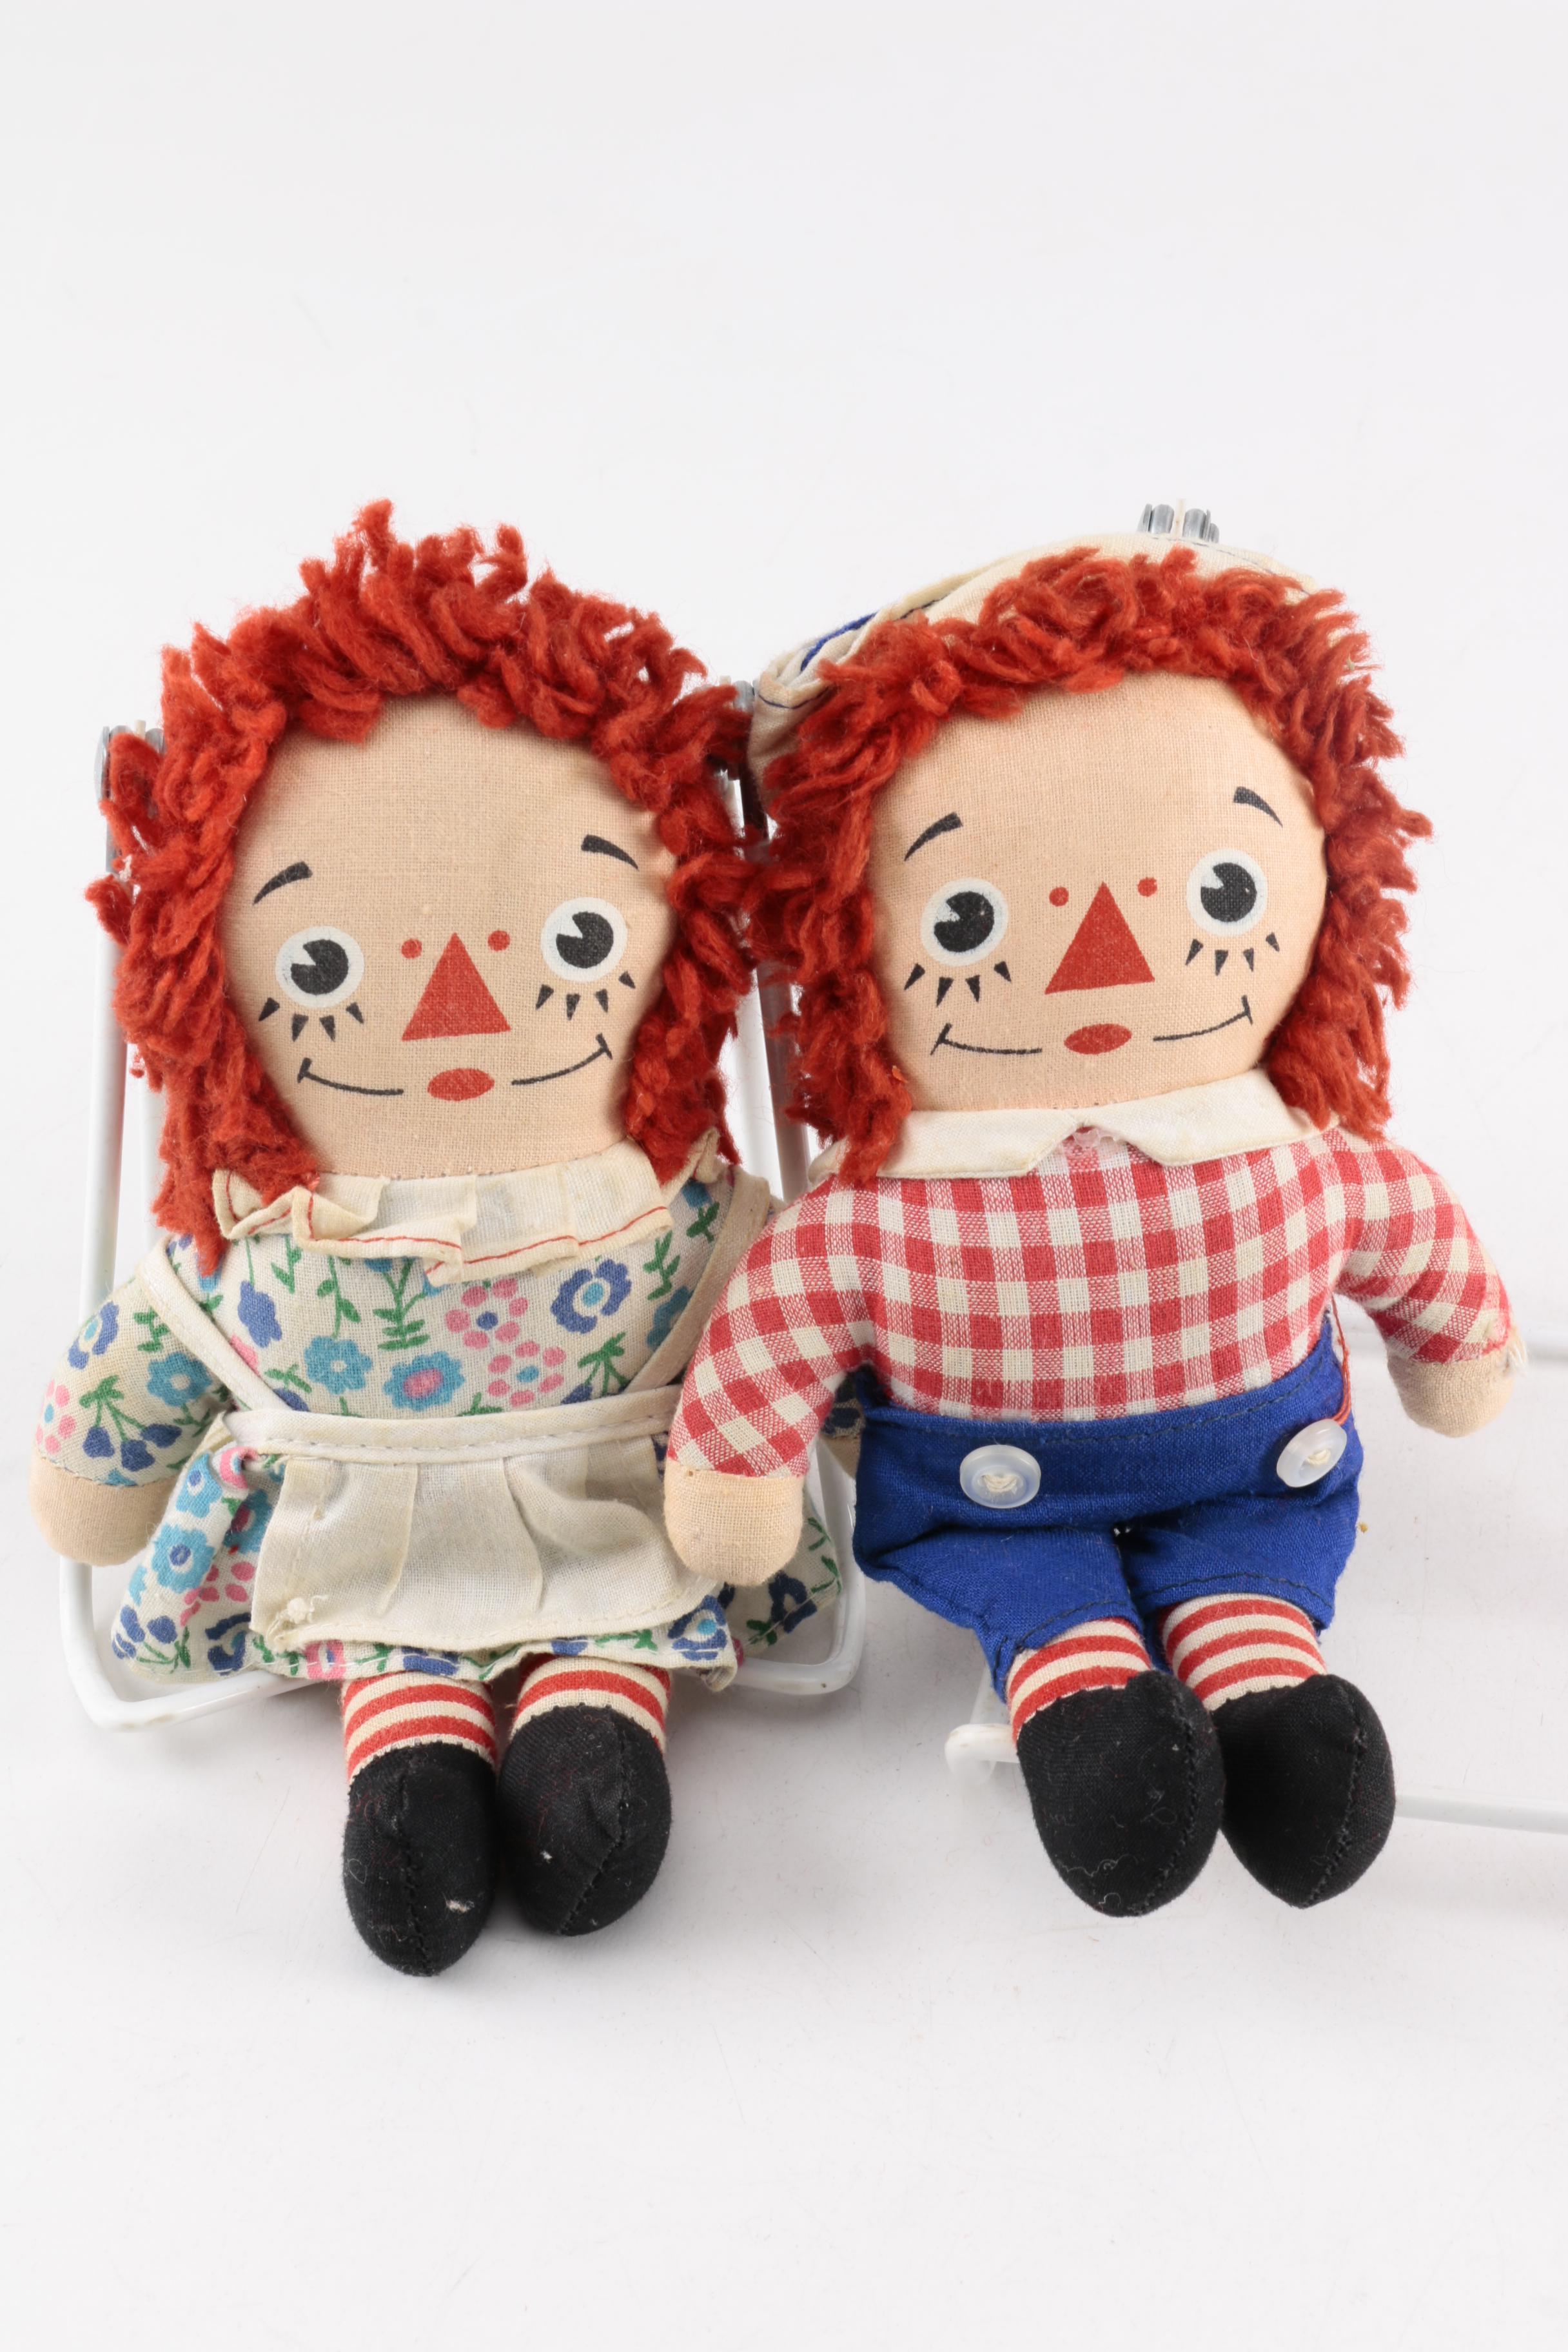 vintage knickerbocker raggedy ann and andy dolls